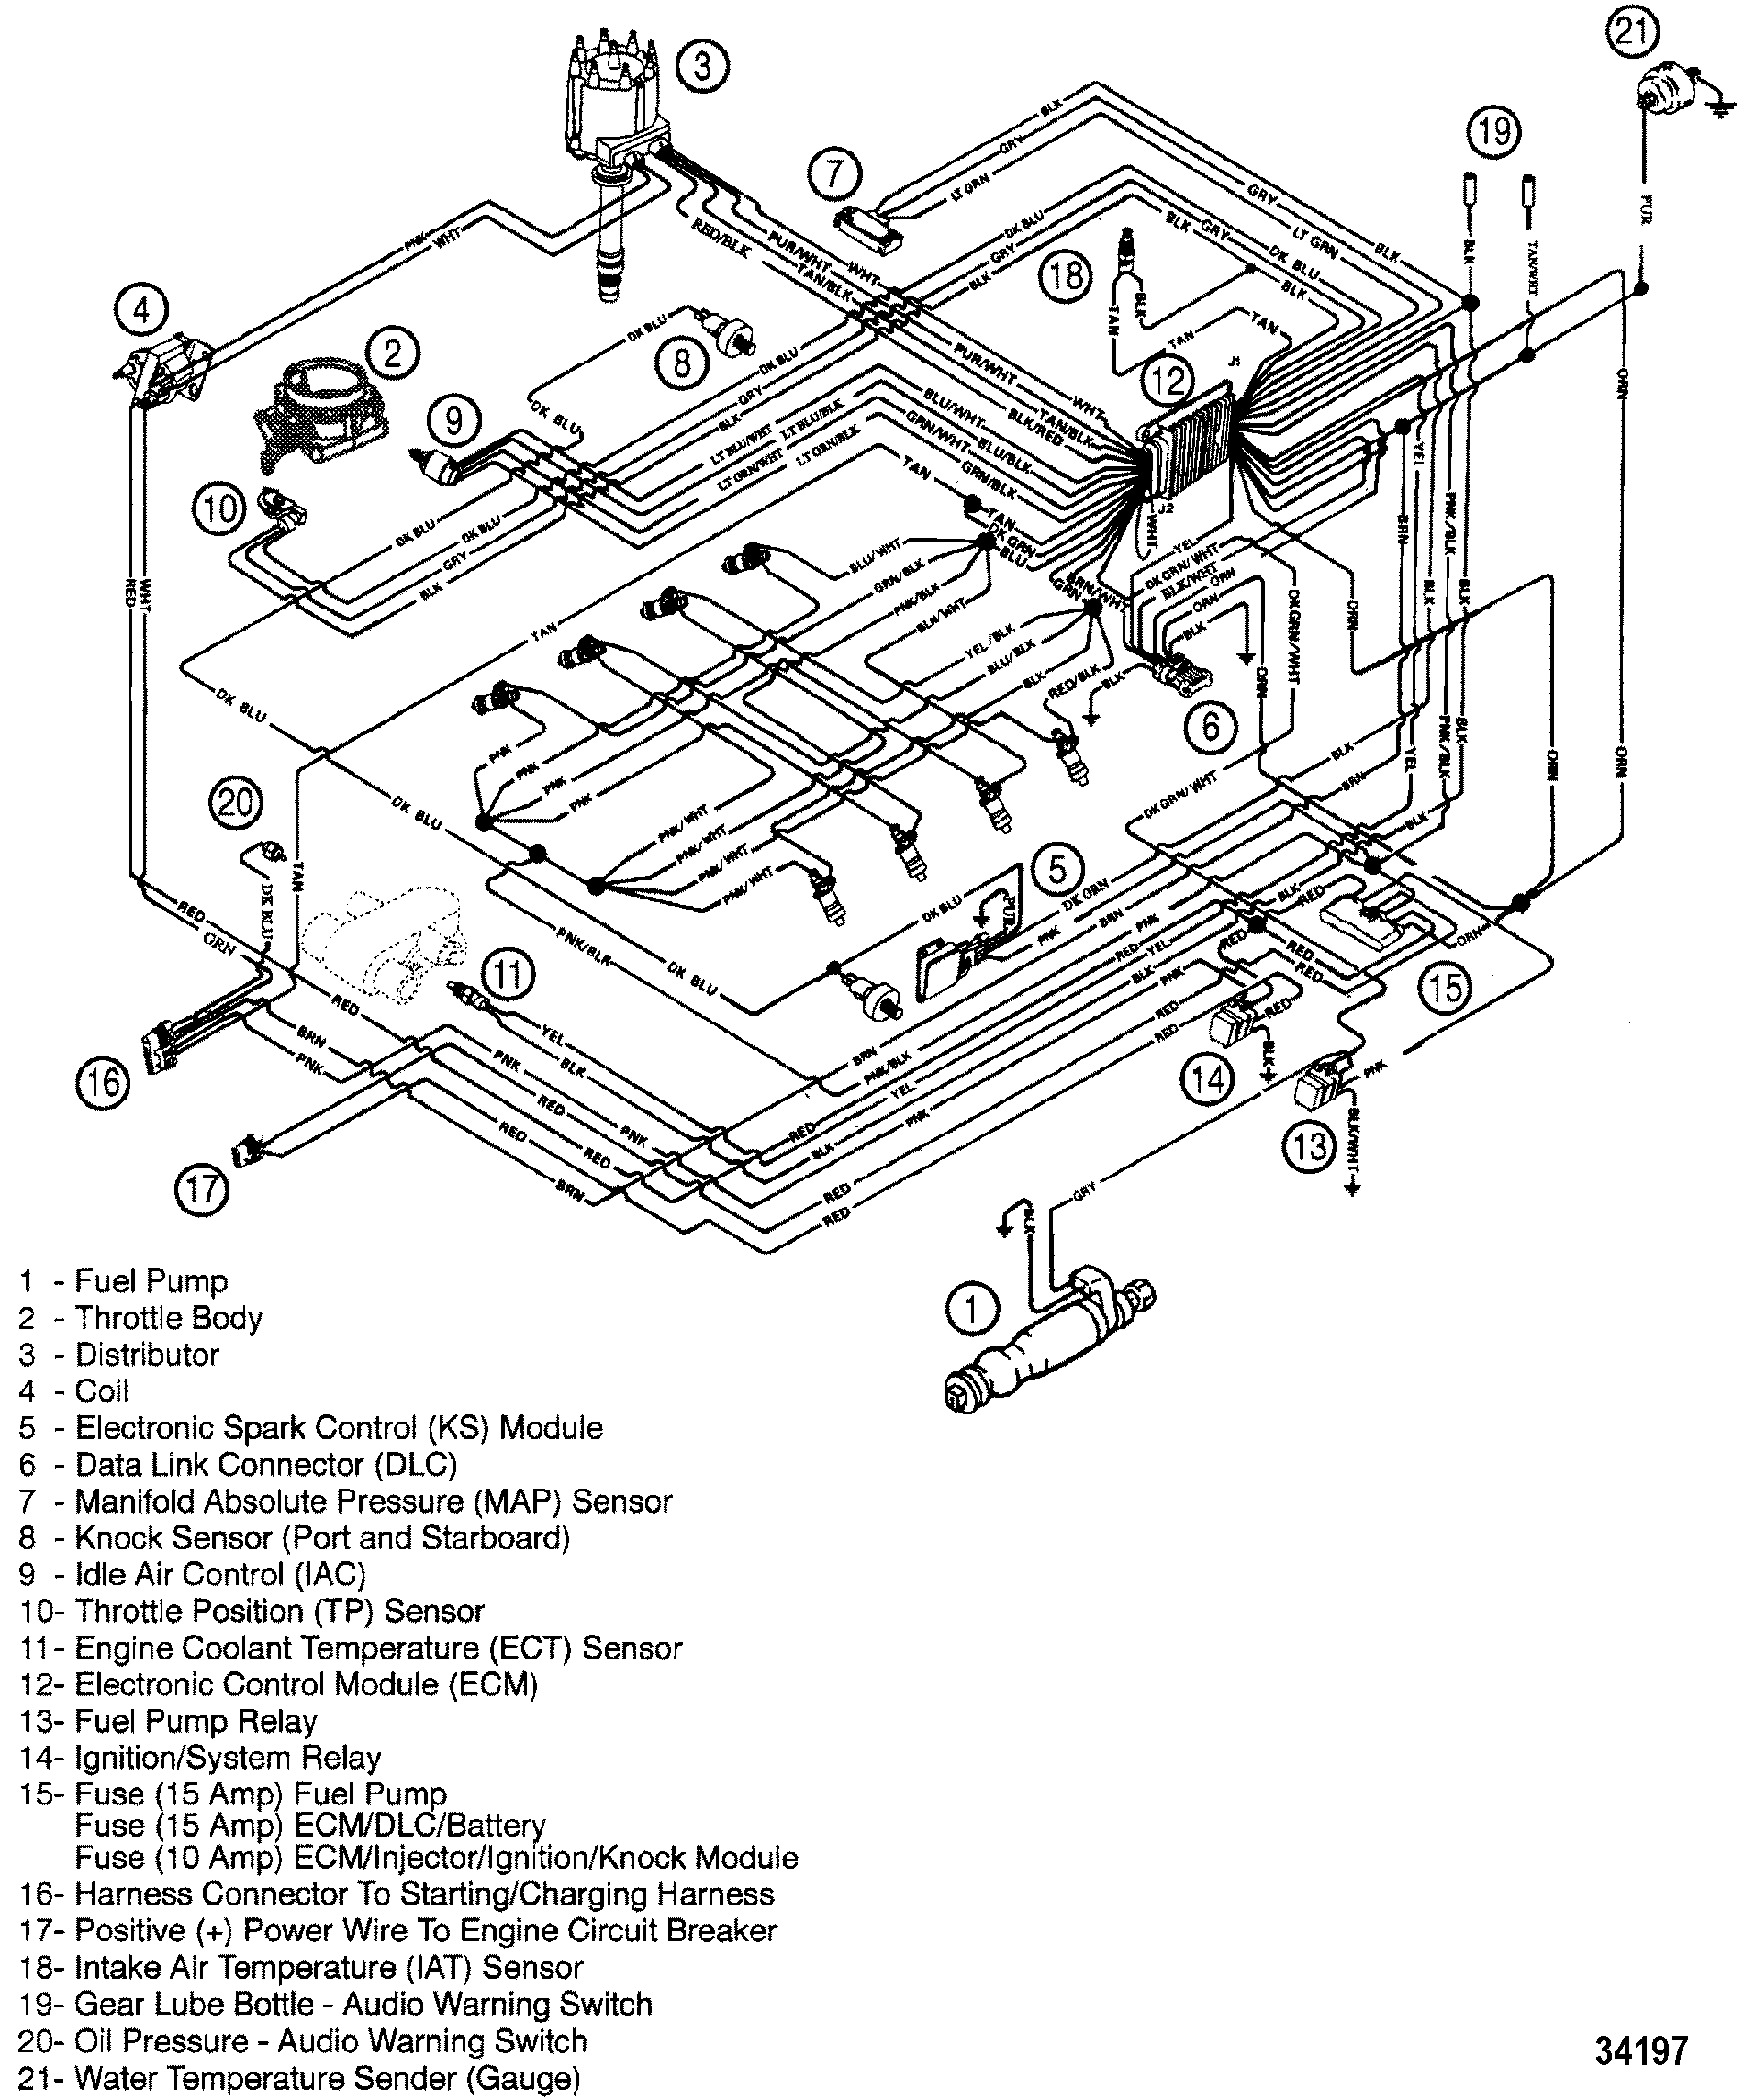 mercruiser 5.0 mpi wiring diagram